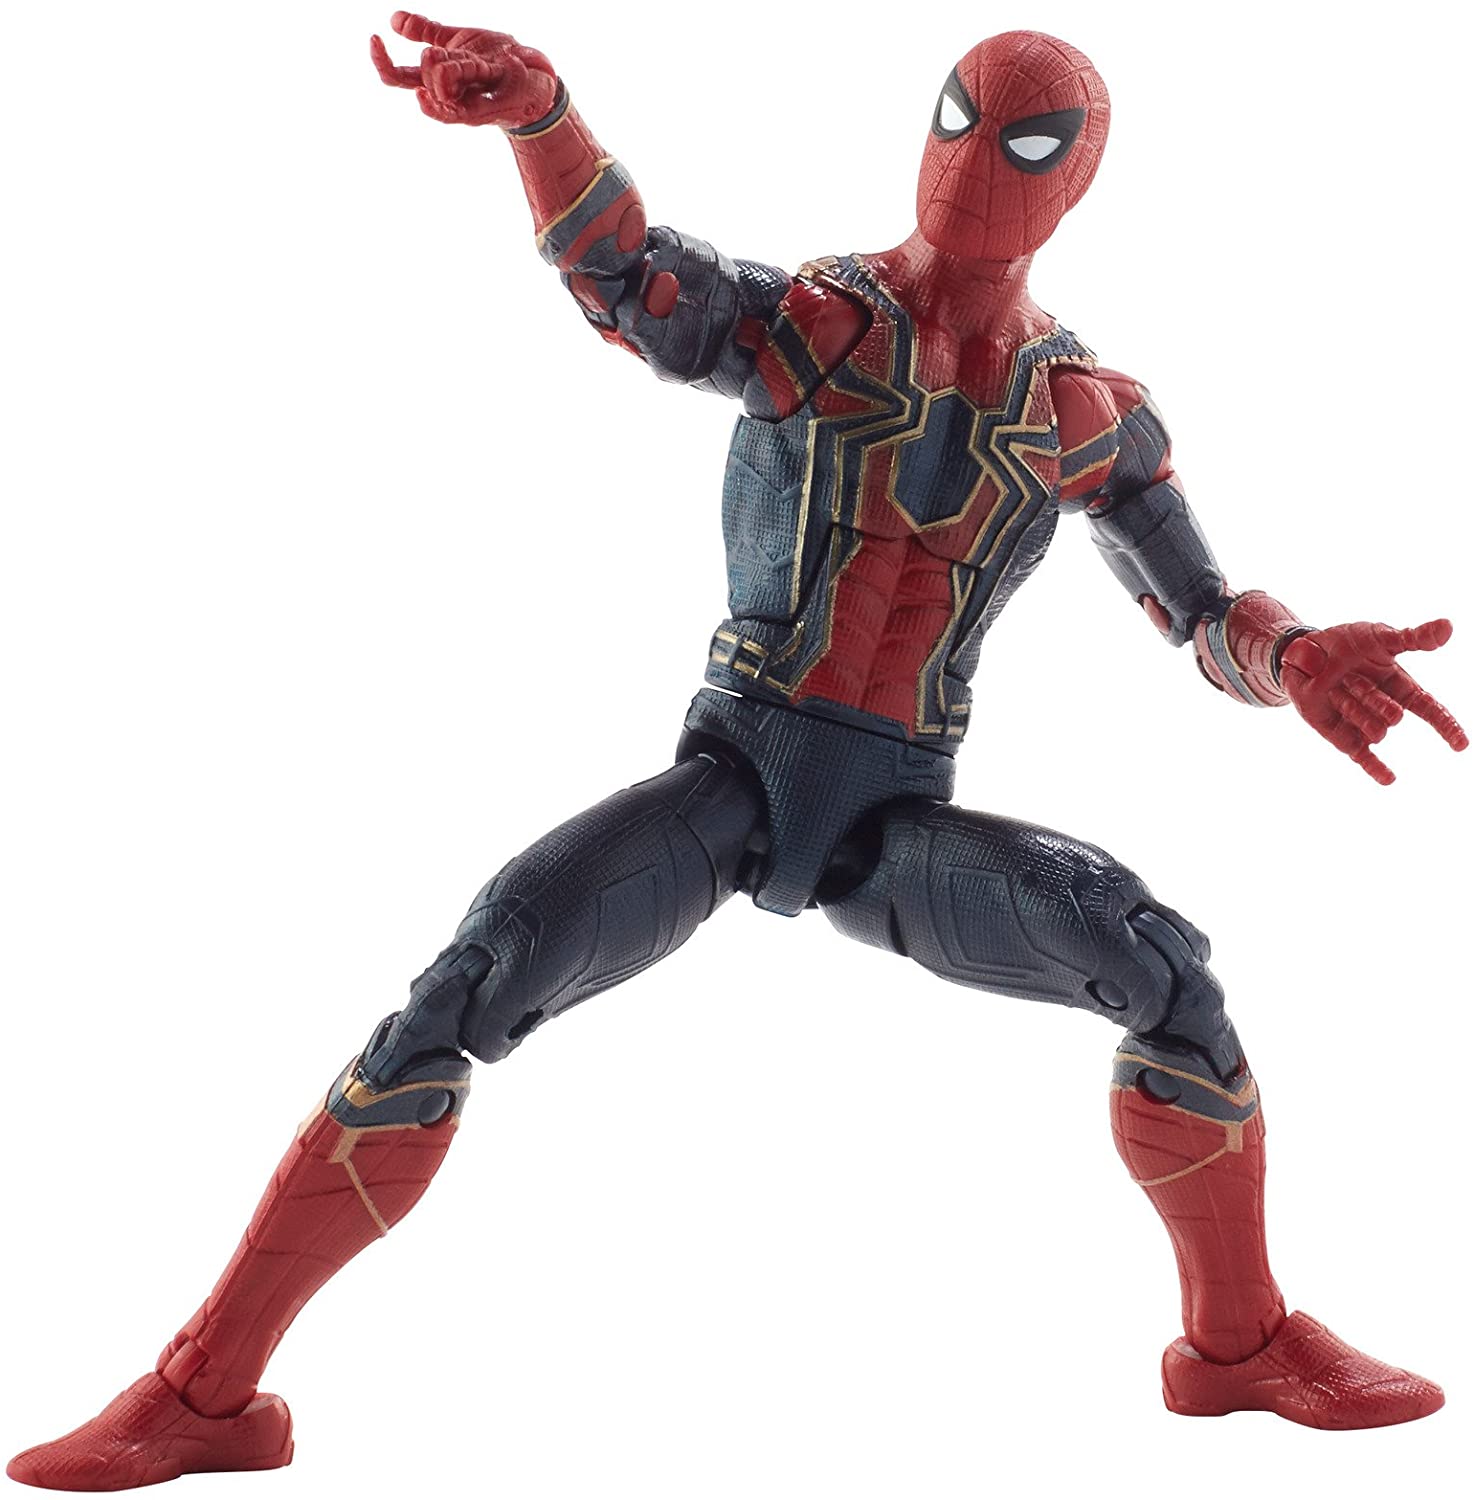 iron spider action figure marvel legends